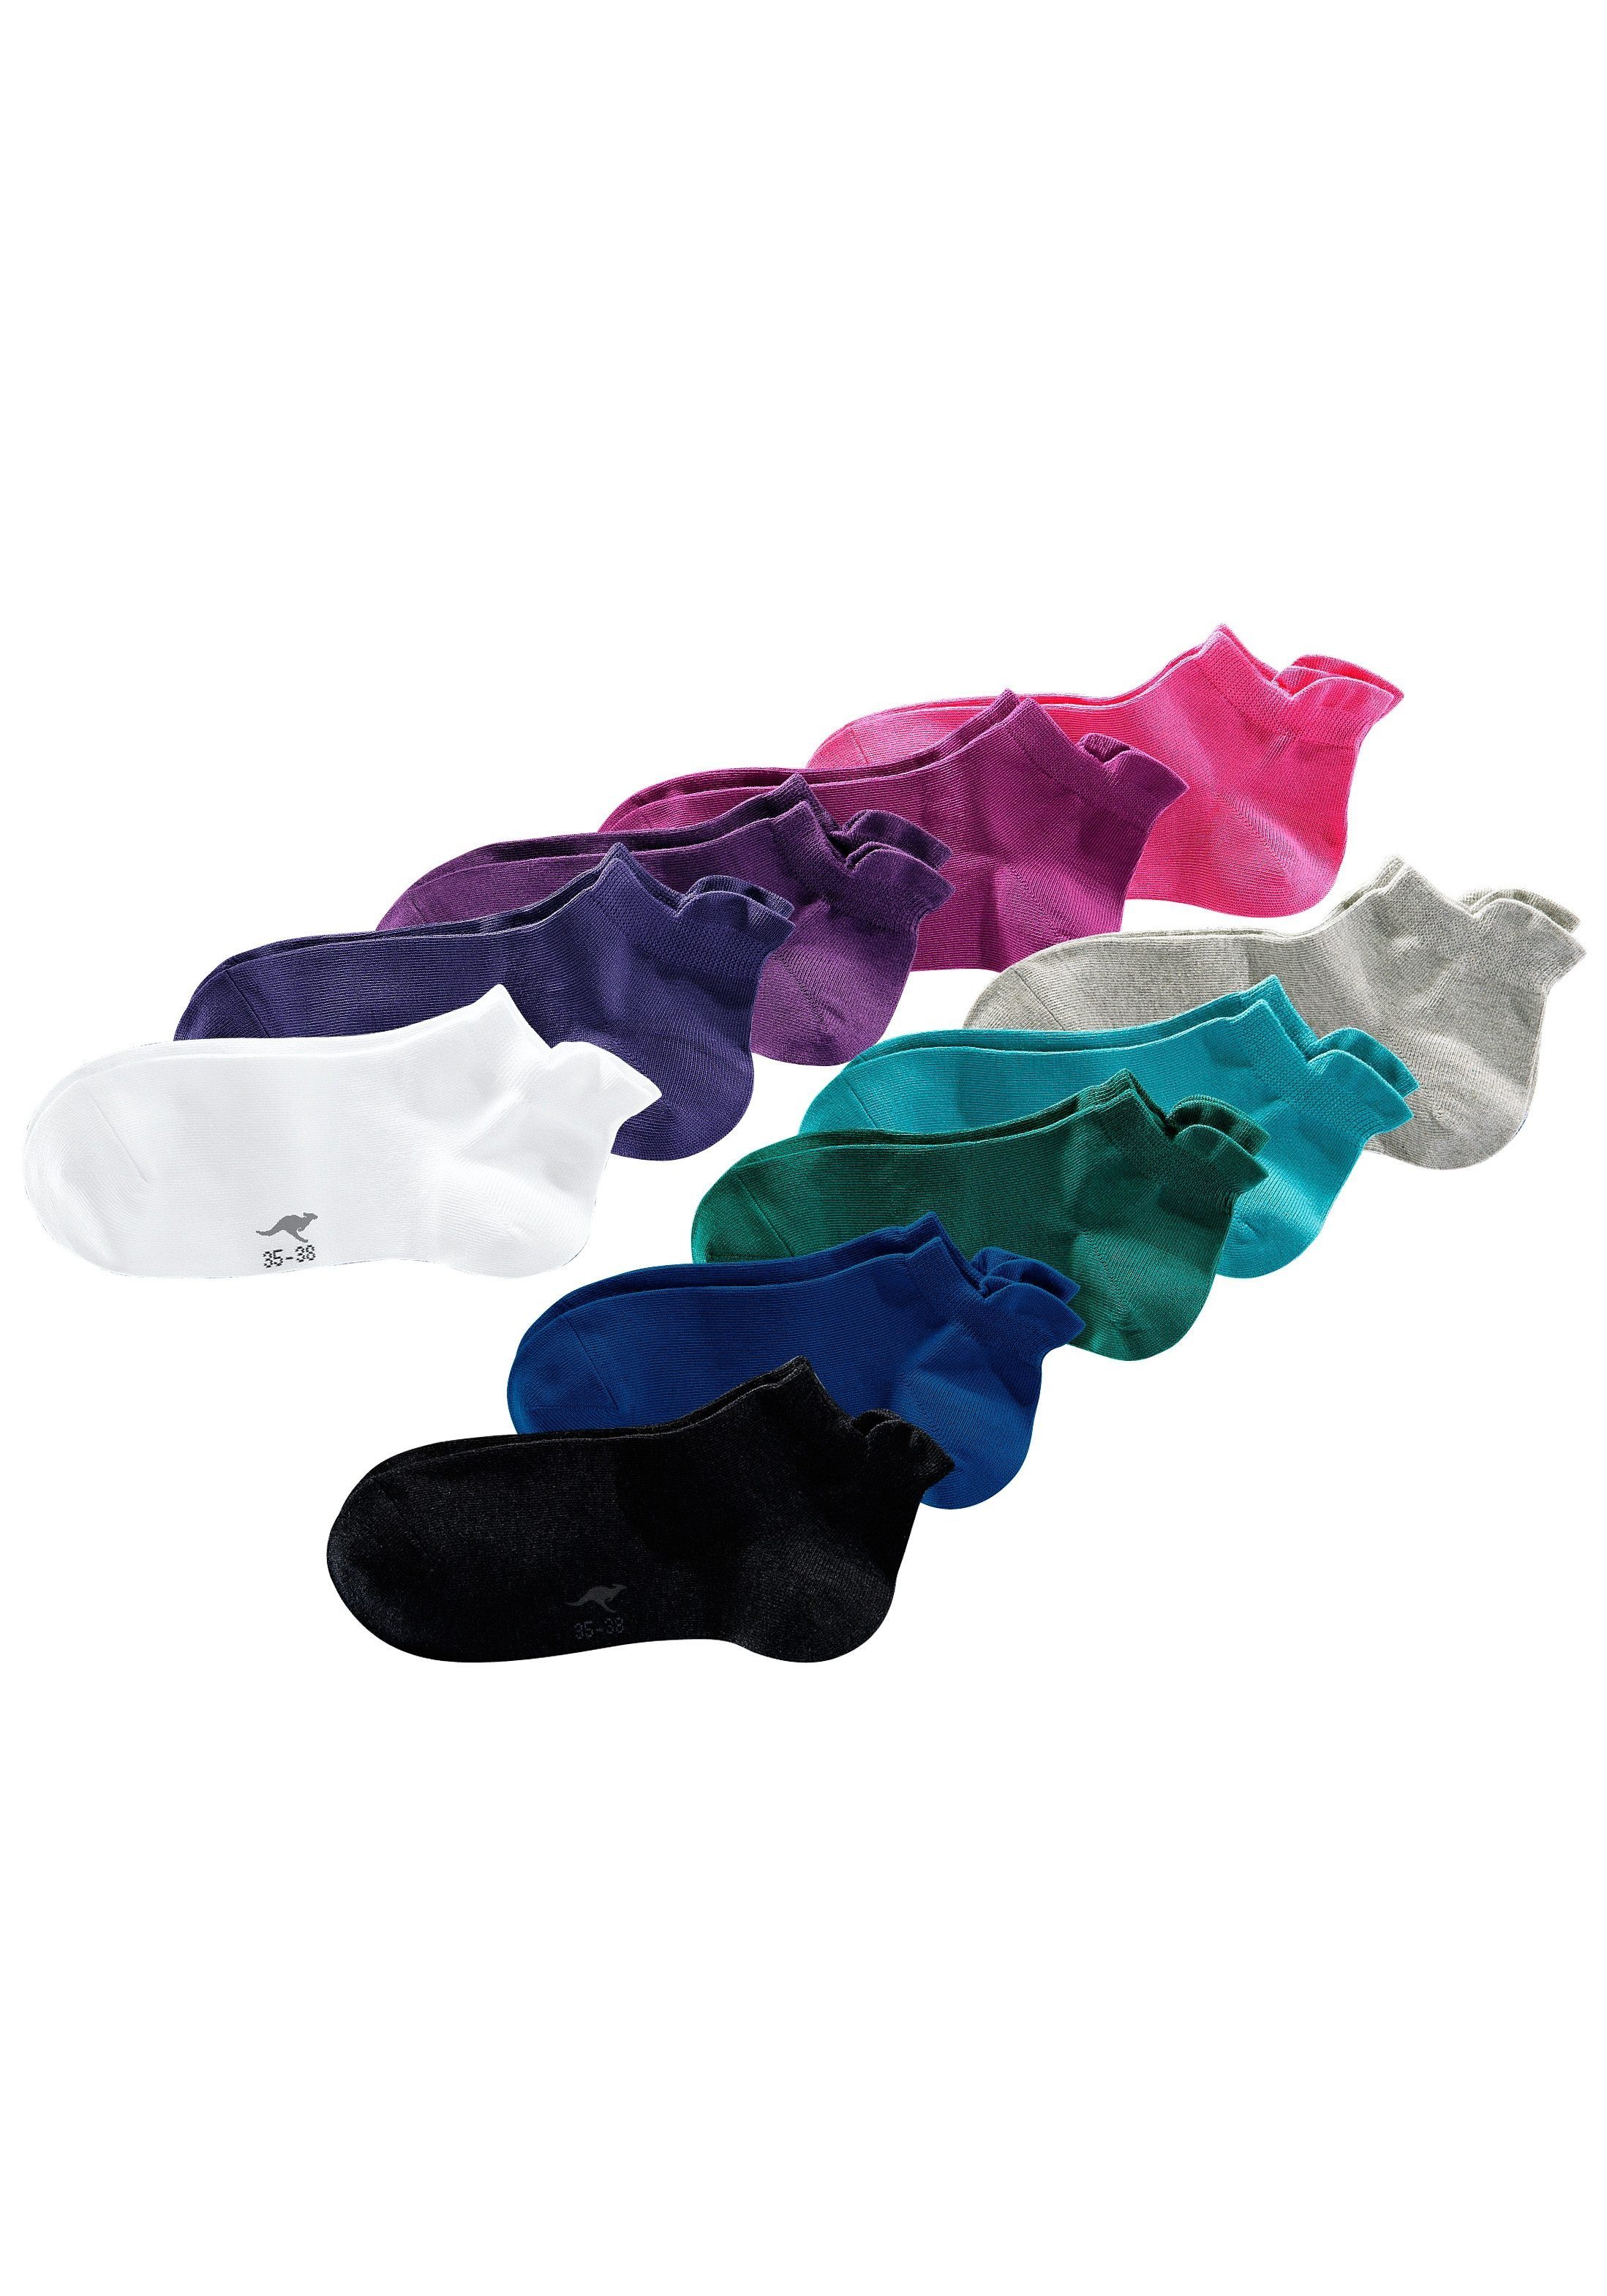 KangaROOS Sneakersocken (Set, 10-Paar) mit * lila Bündchen pflaume türkis - weiß - - - erhöhtem himbeere schwarz - pink petrol grau - - blau 